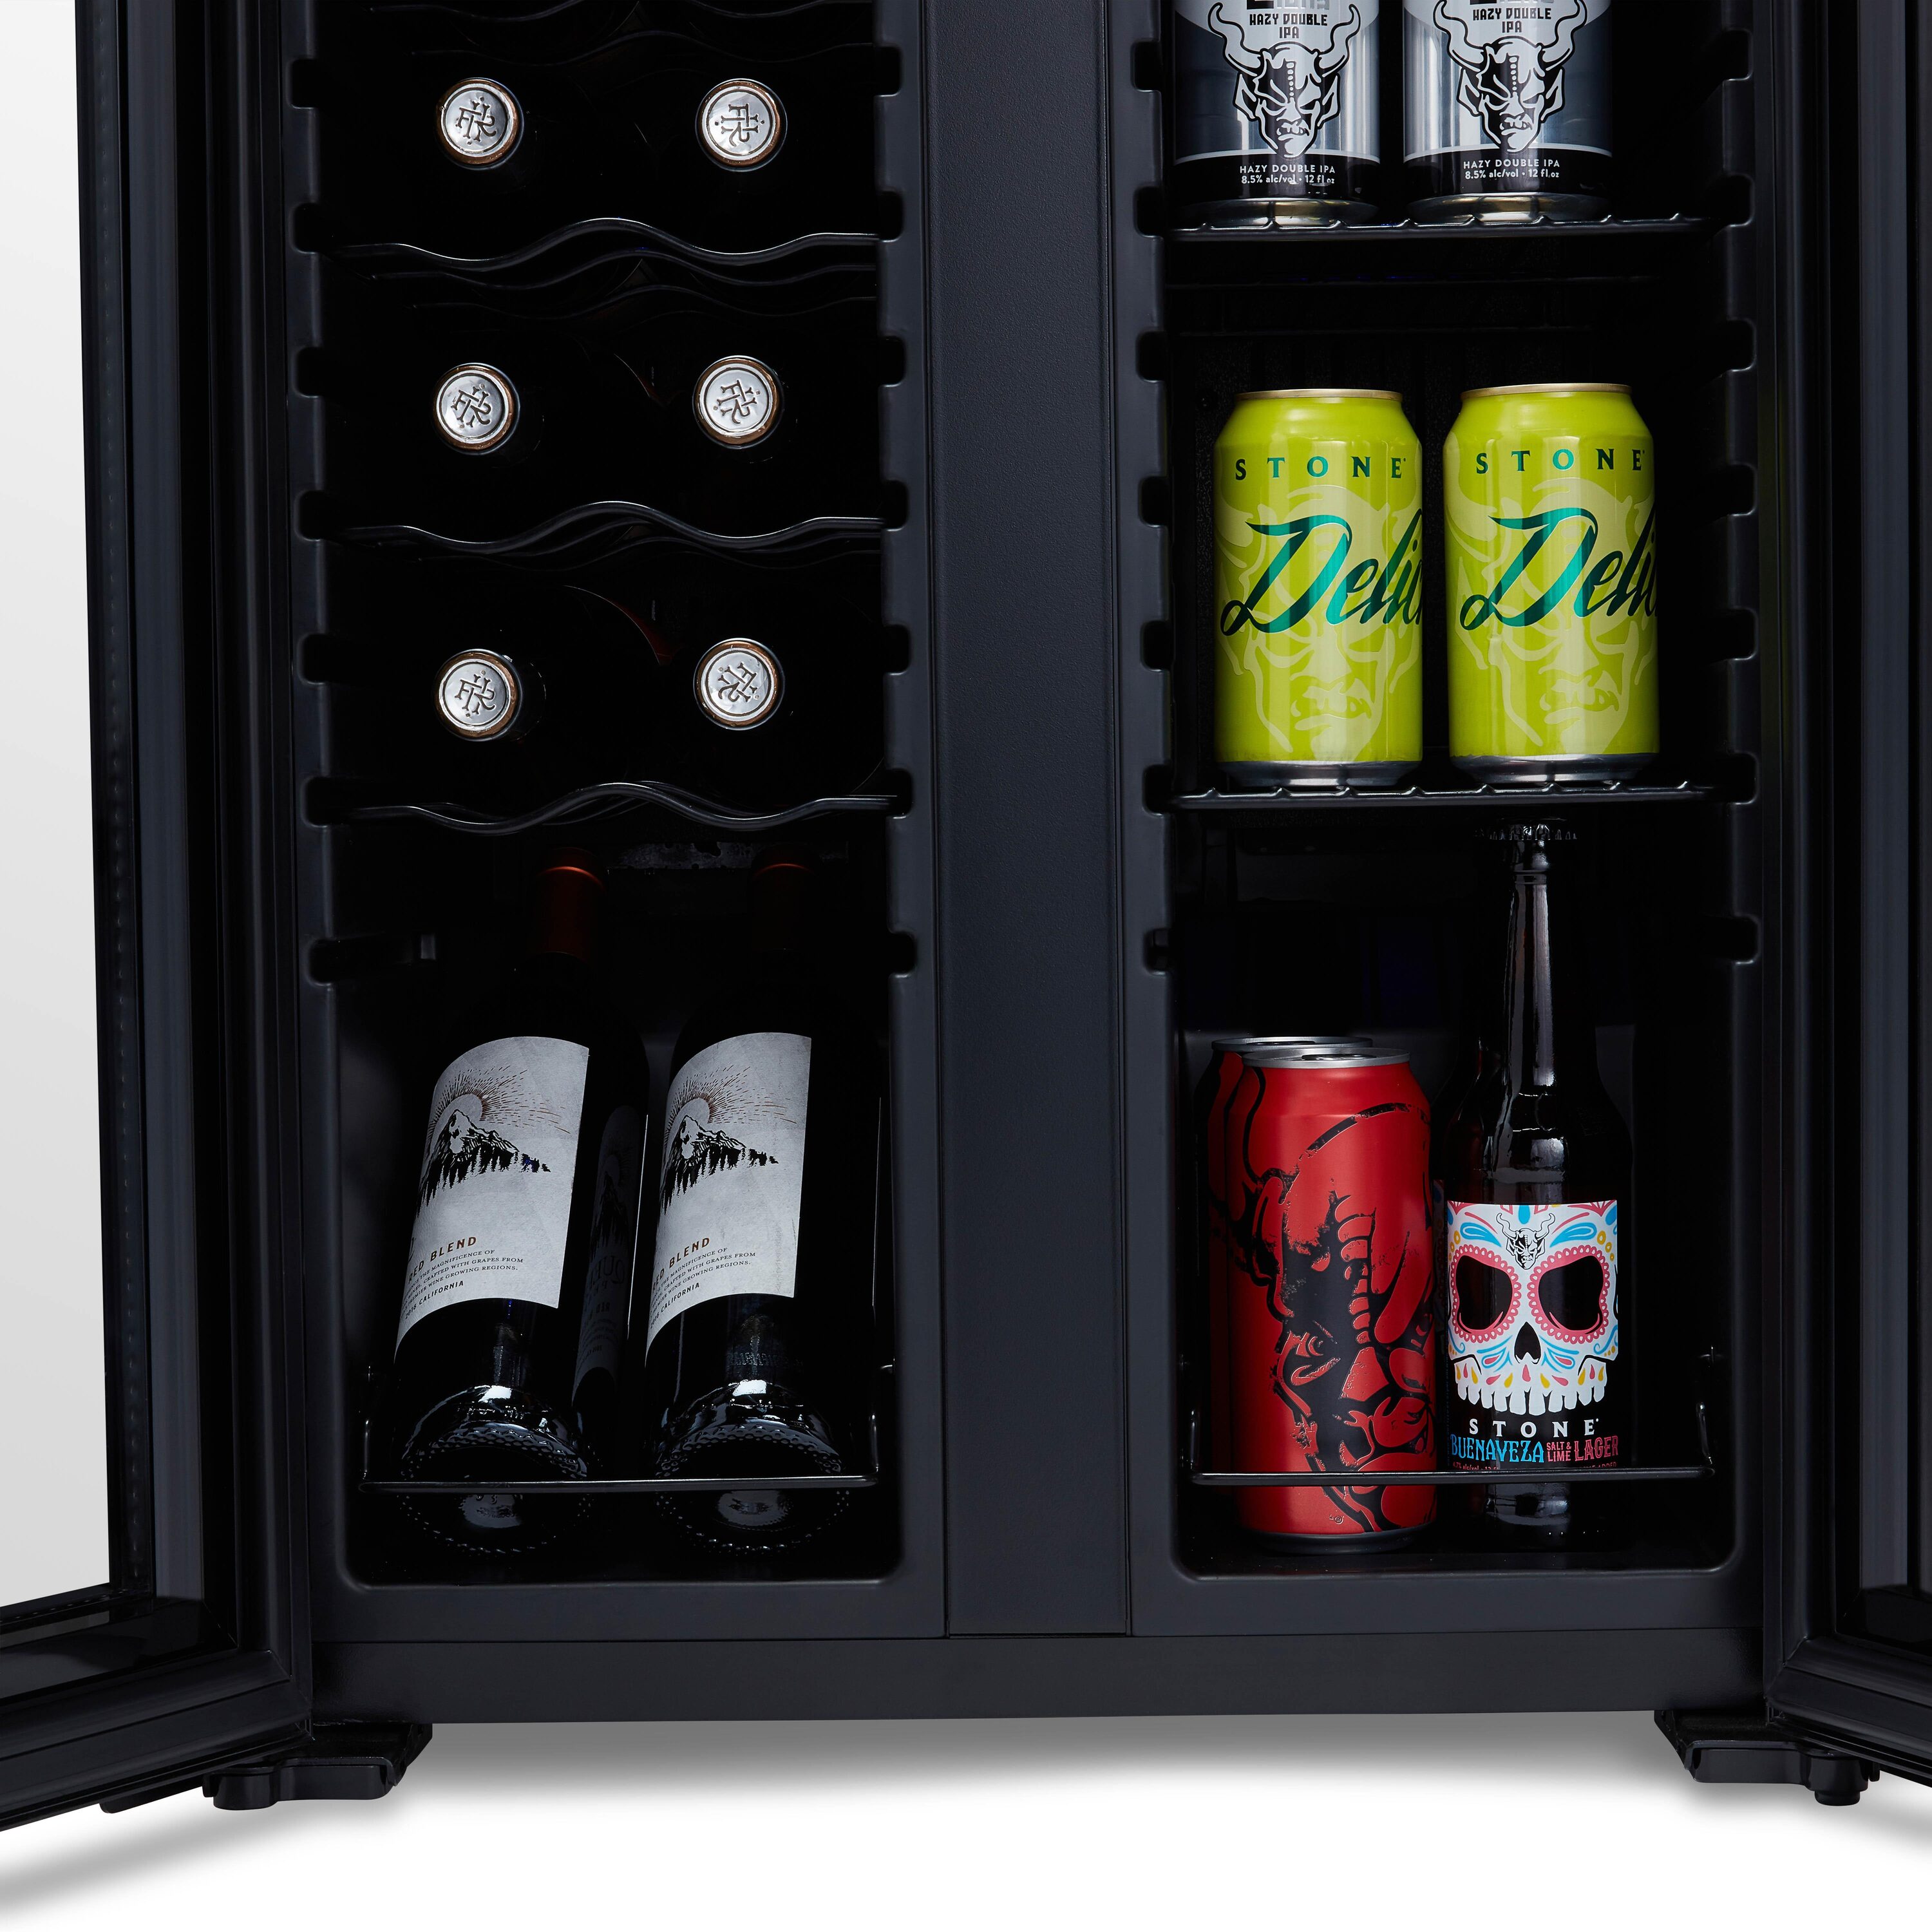 Black+decker 26-Bottle Capacity Wine cellar Black